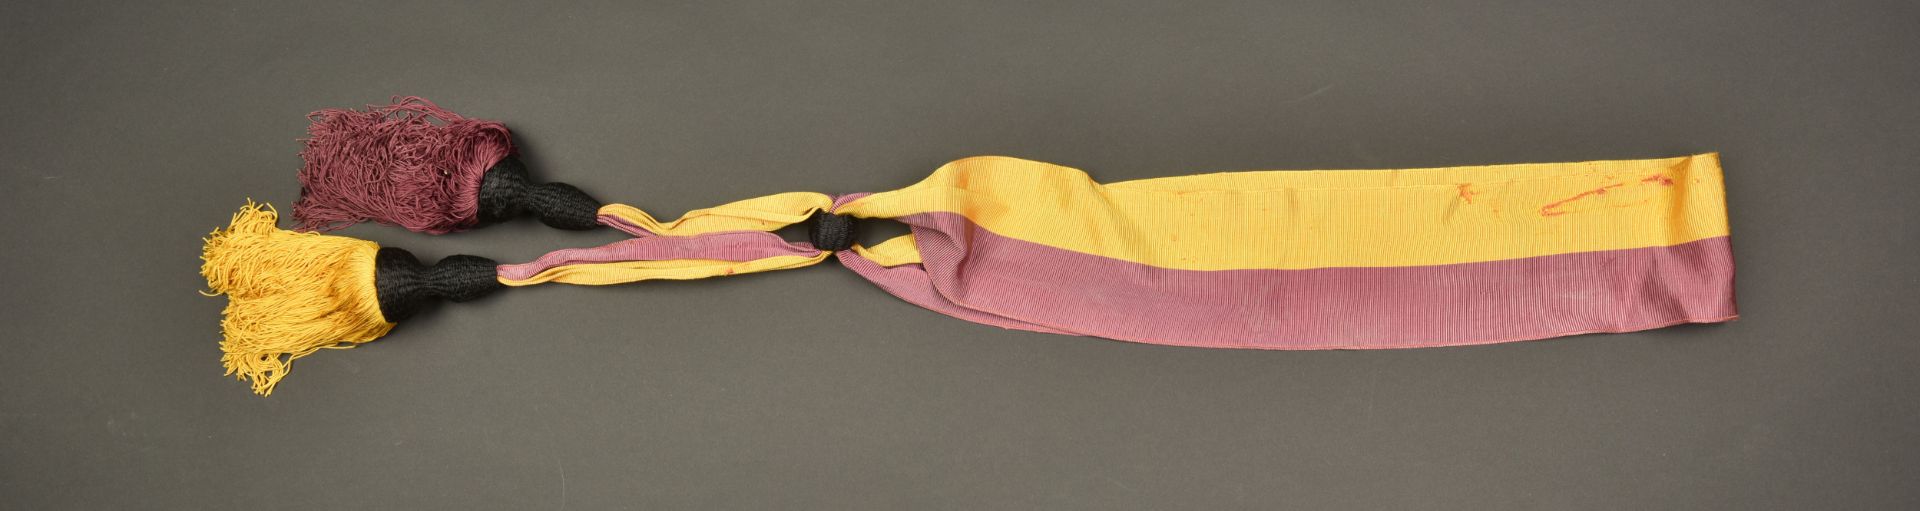 Echarpe italienne. Italian scarf. - Image 3 of 3